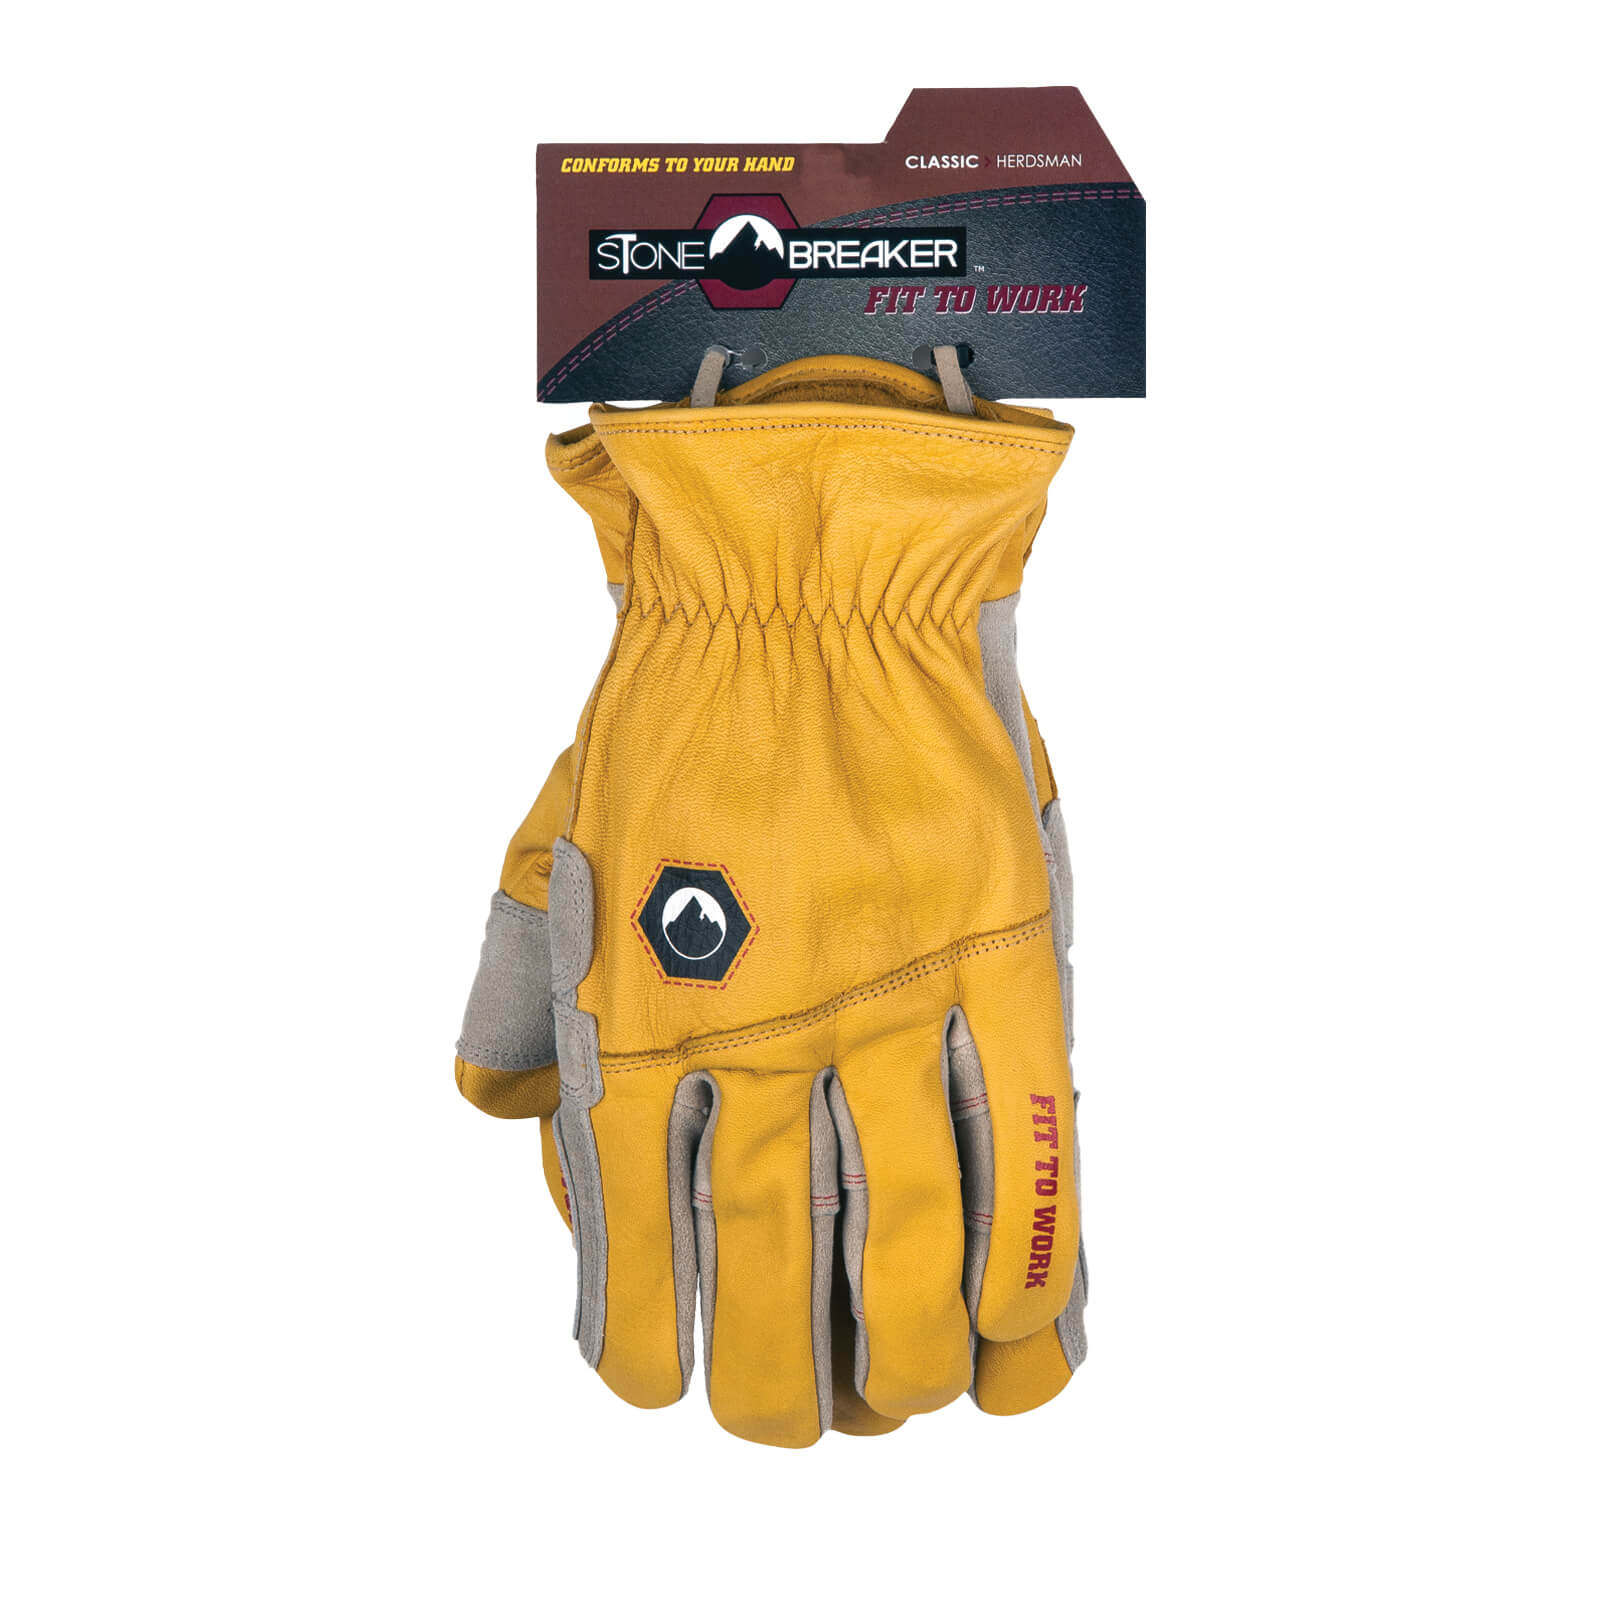 StoneBreaker Rancher Leather Work Gloves - Extra Large